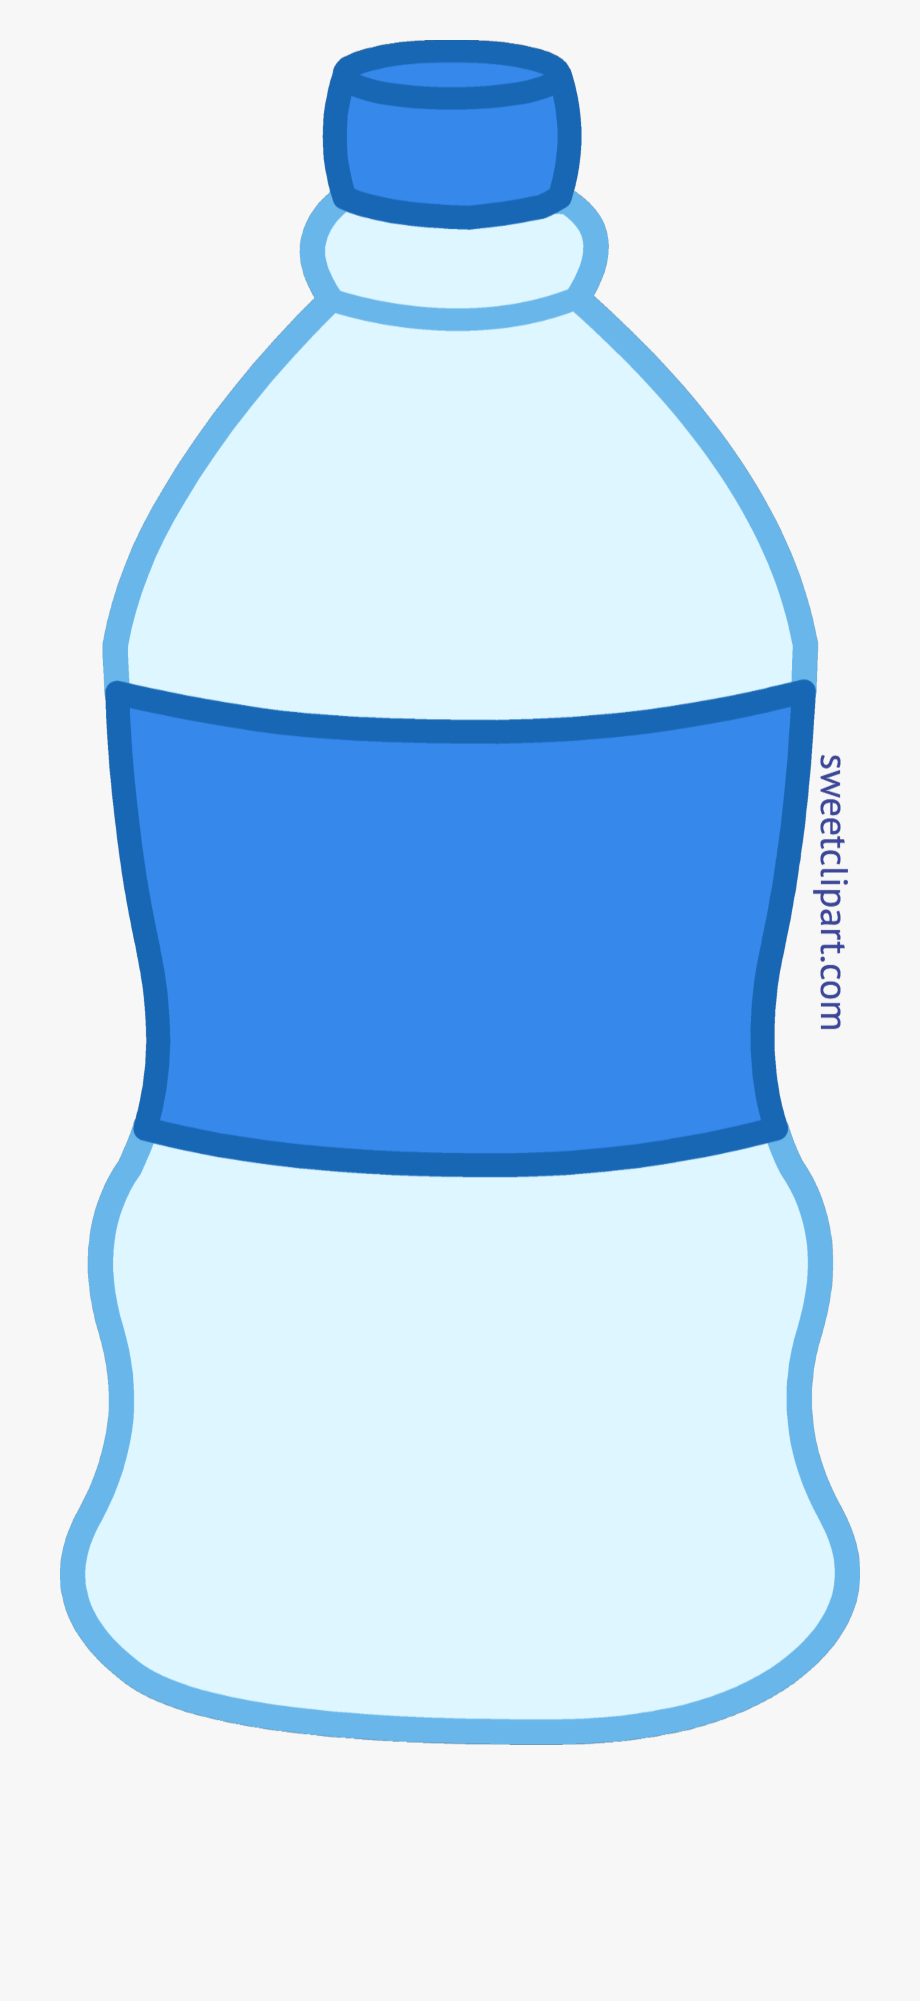 Water clipart clip art. Bottle free 